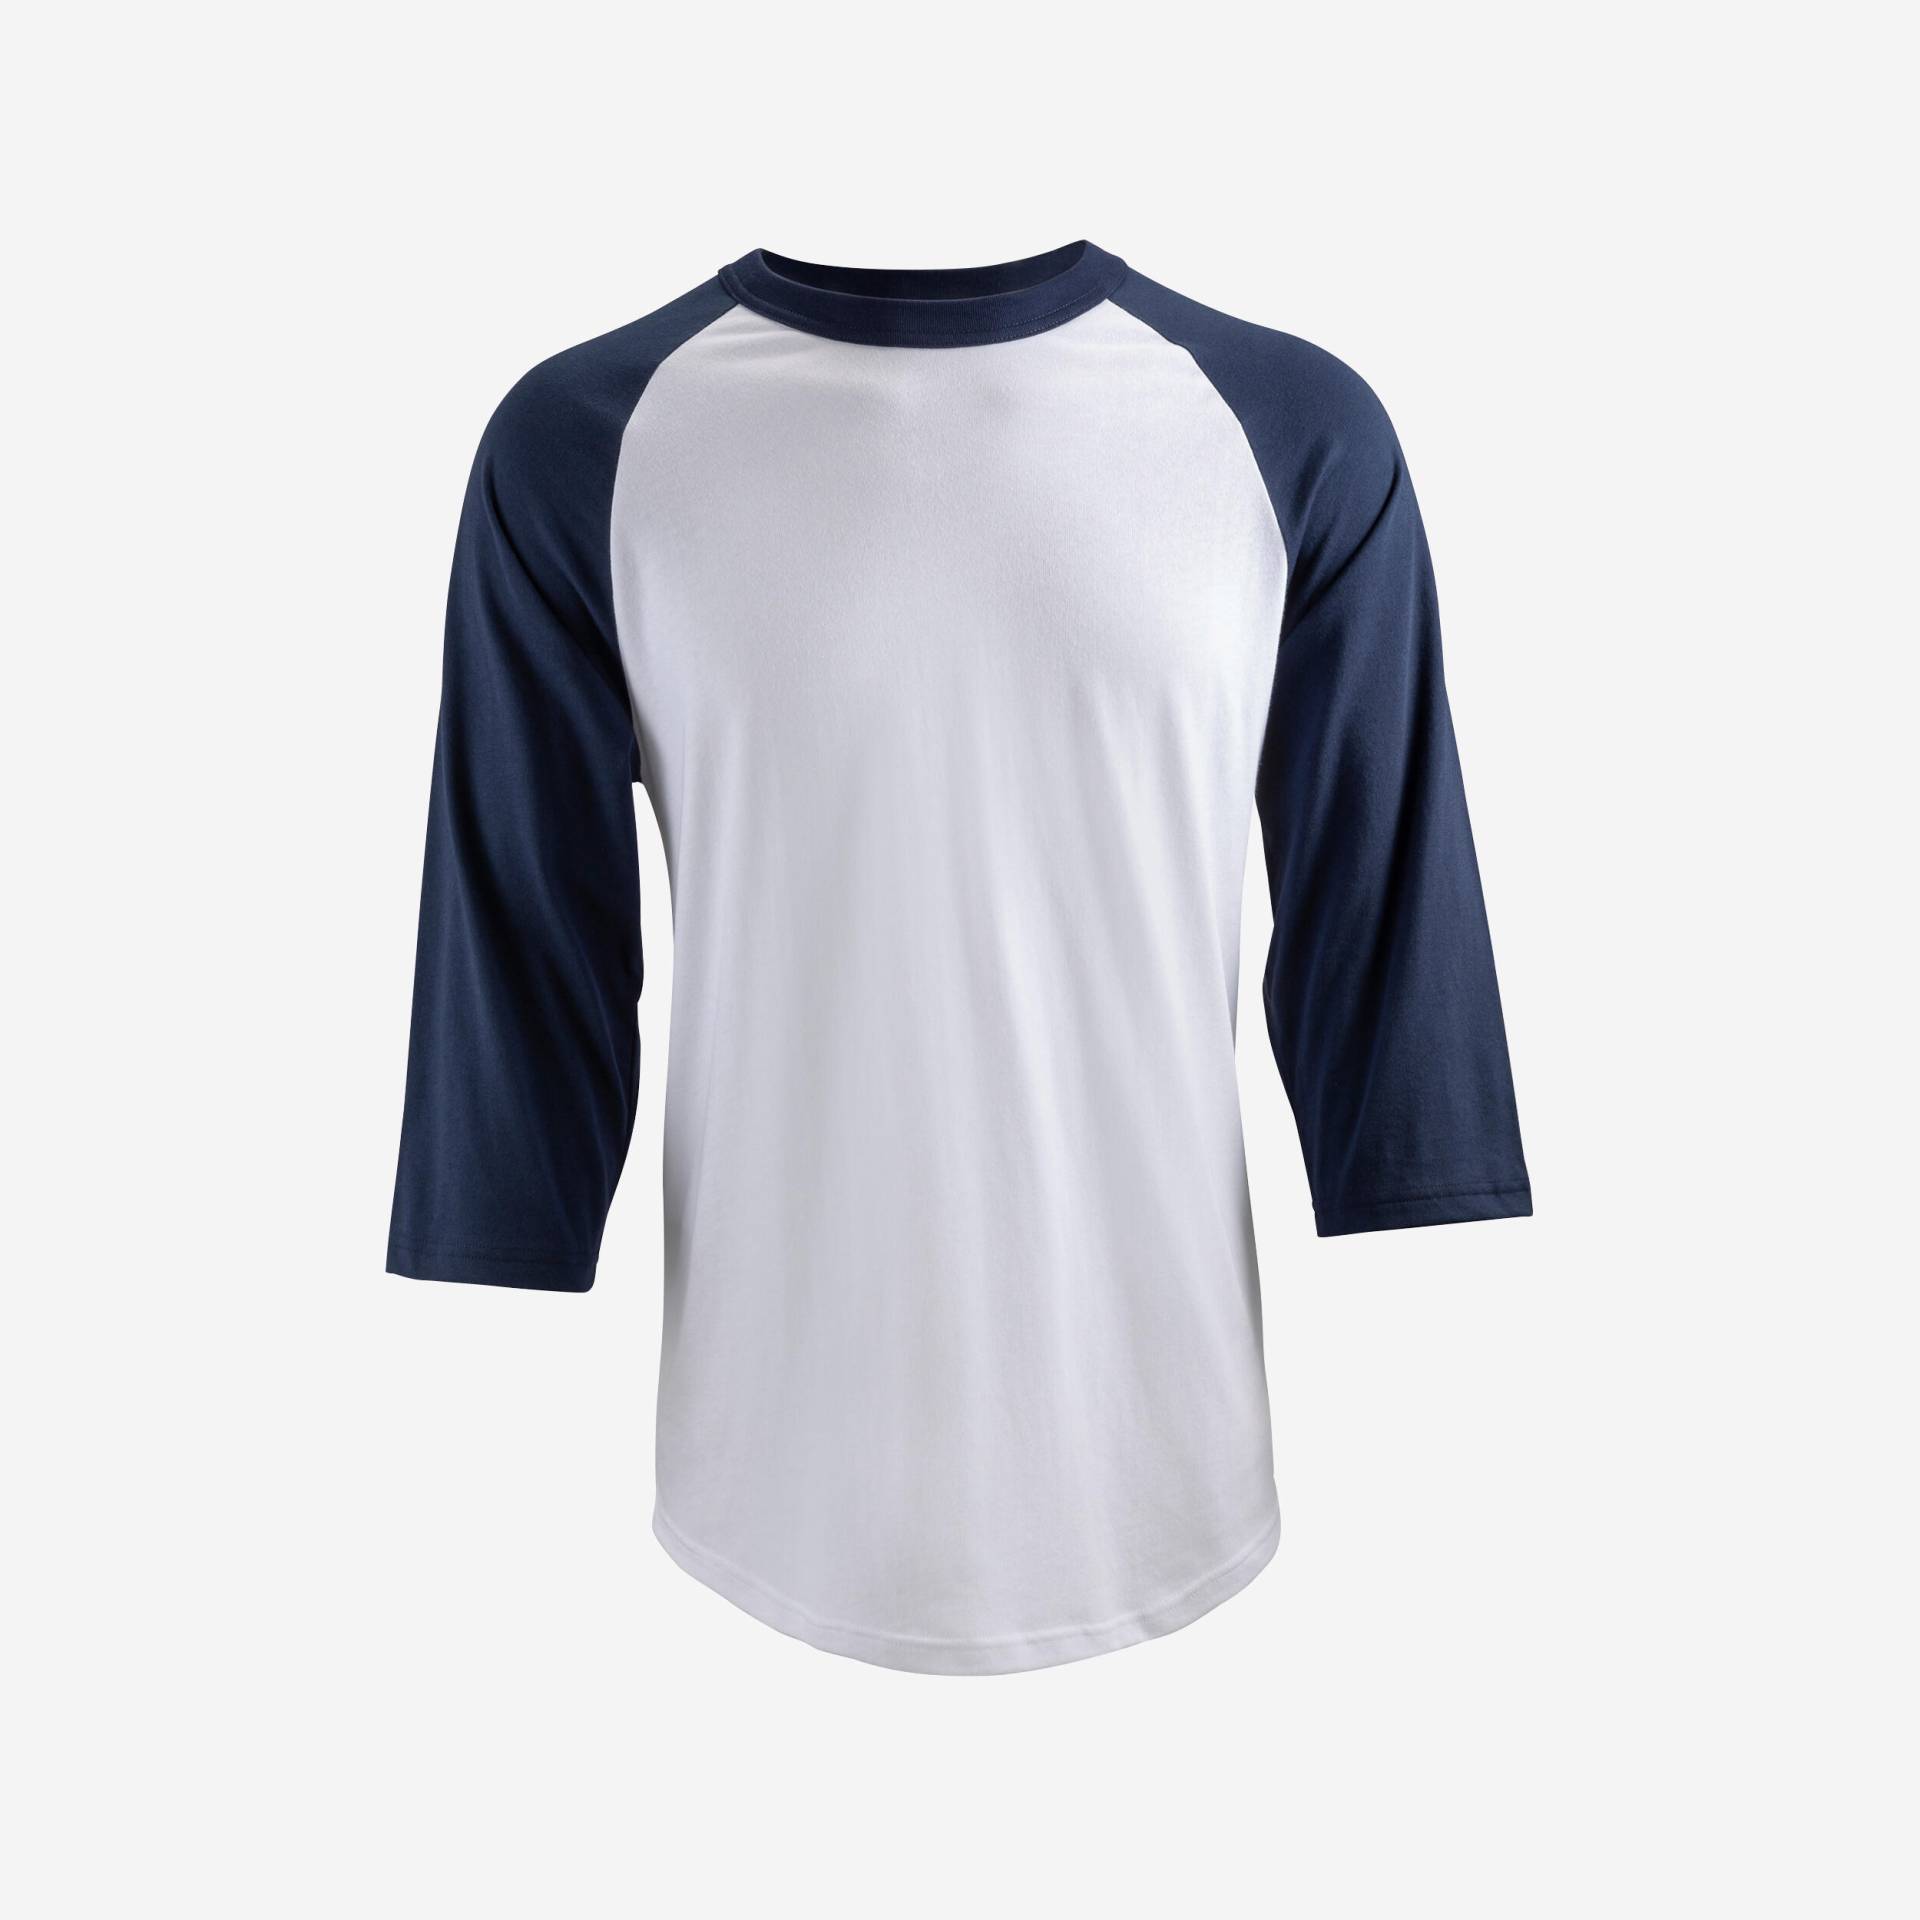 Baseball-Shirt BA550 Herren weiss/blau von KIPSTA